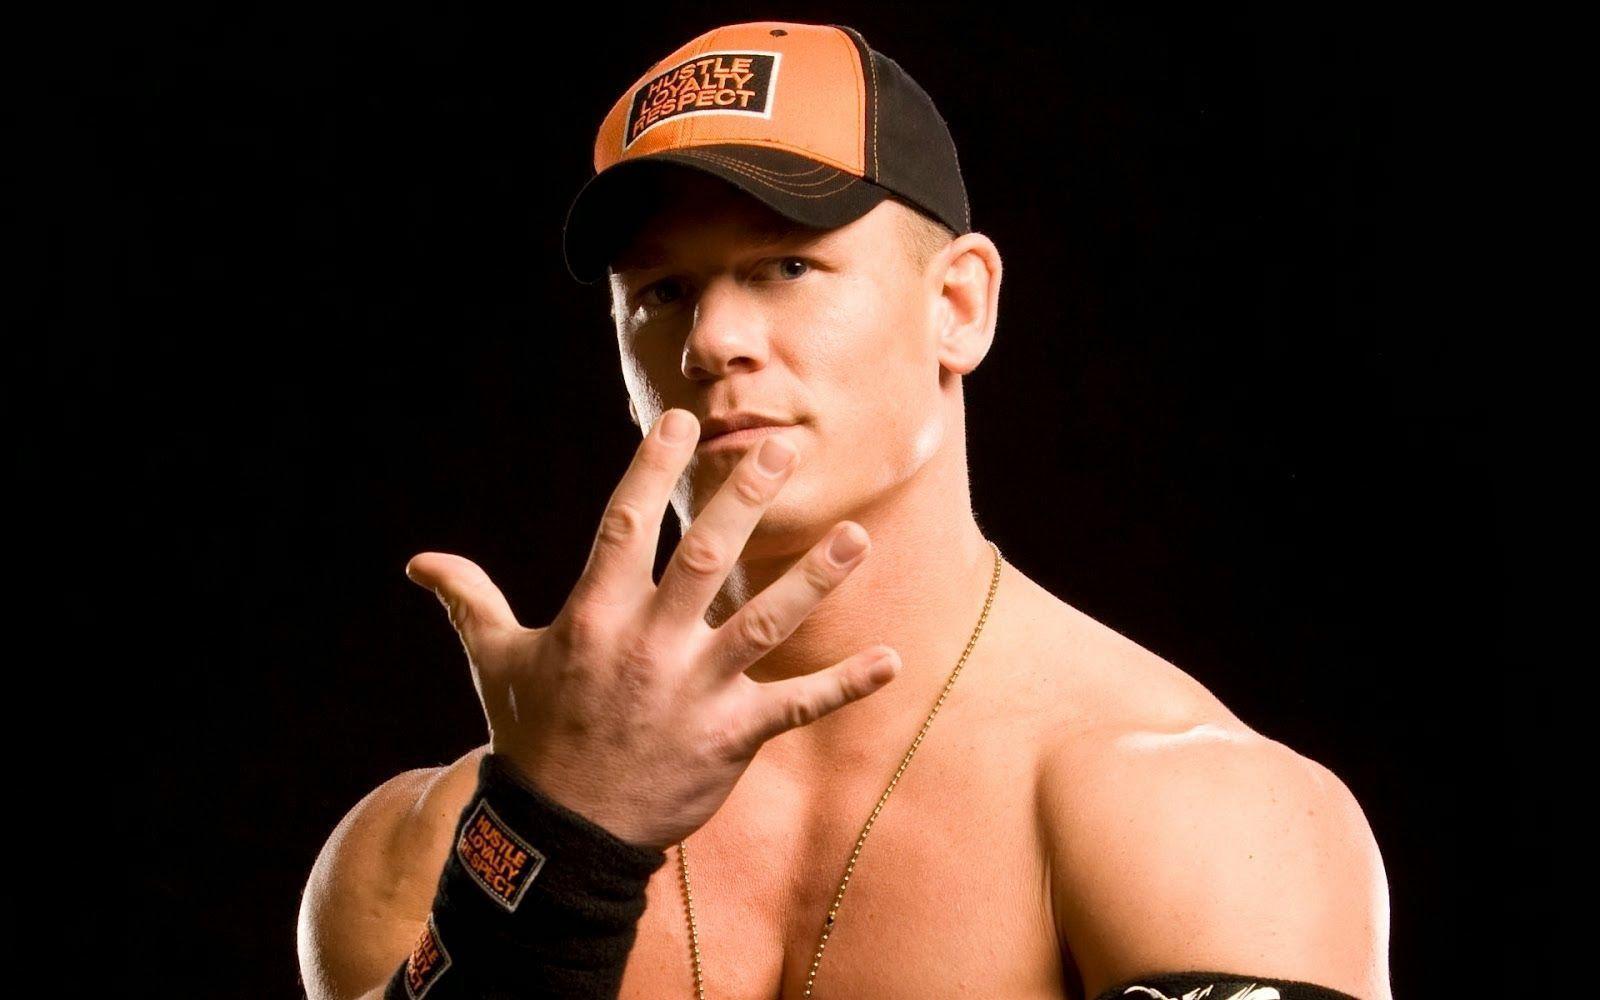 John Cena HD Wallpaper Wrestler. Download Free High